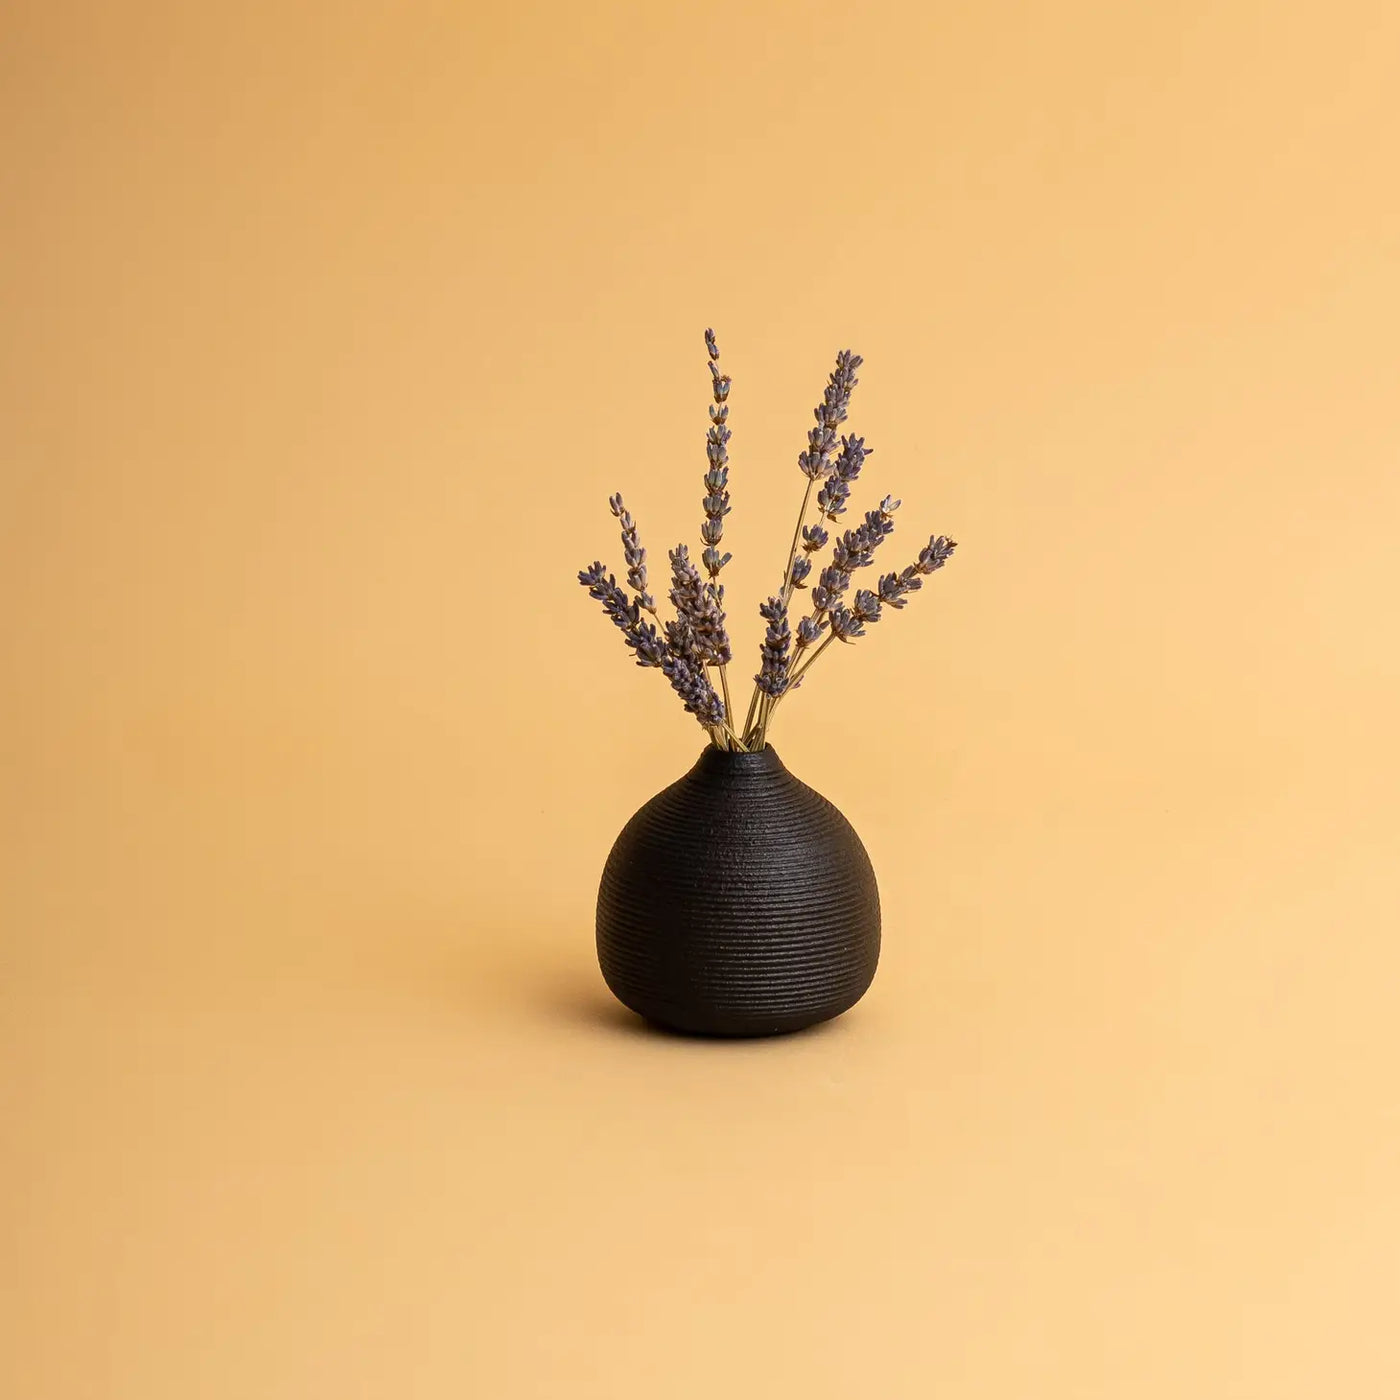 micro vase in black with lavender flowers